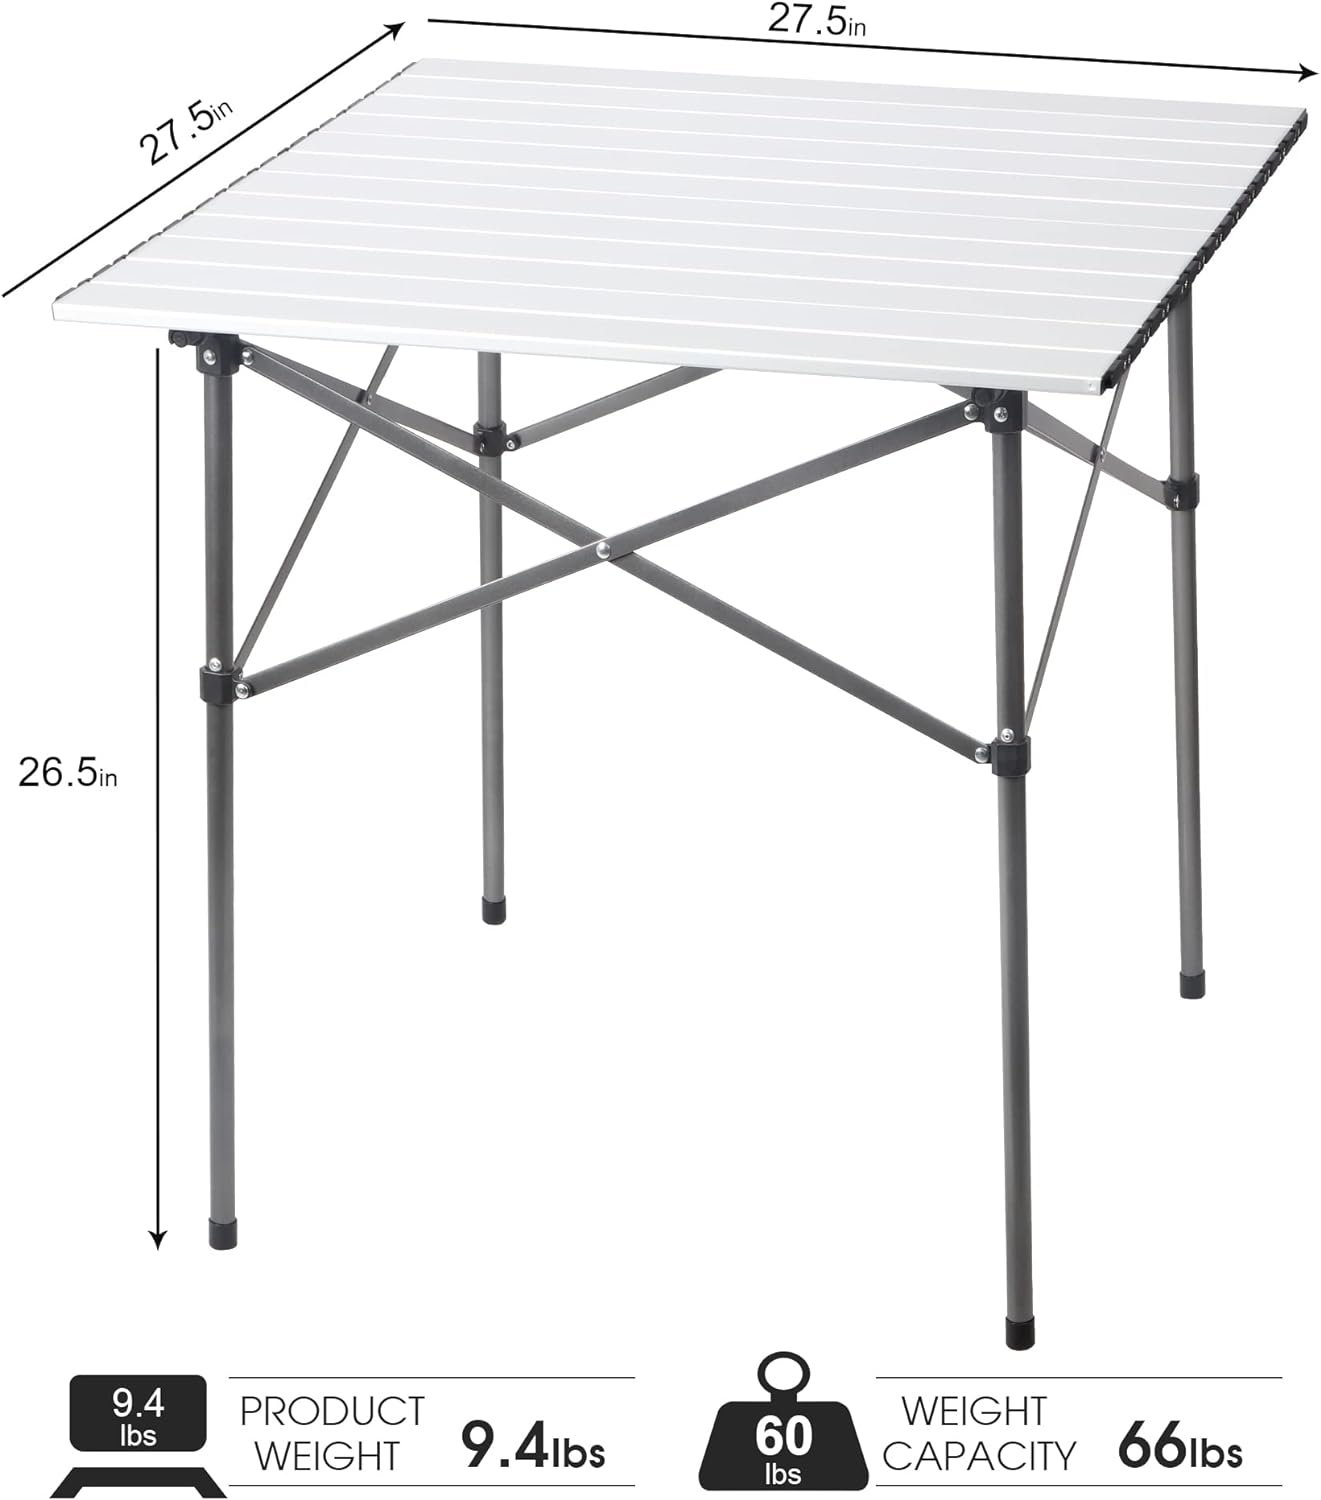 PORTAL Lightweight Aluminum Folding Square Table Review